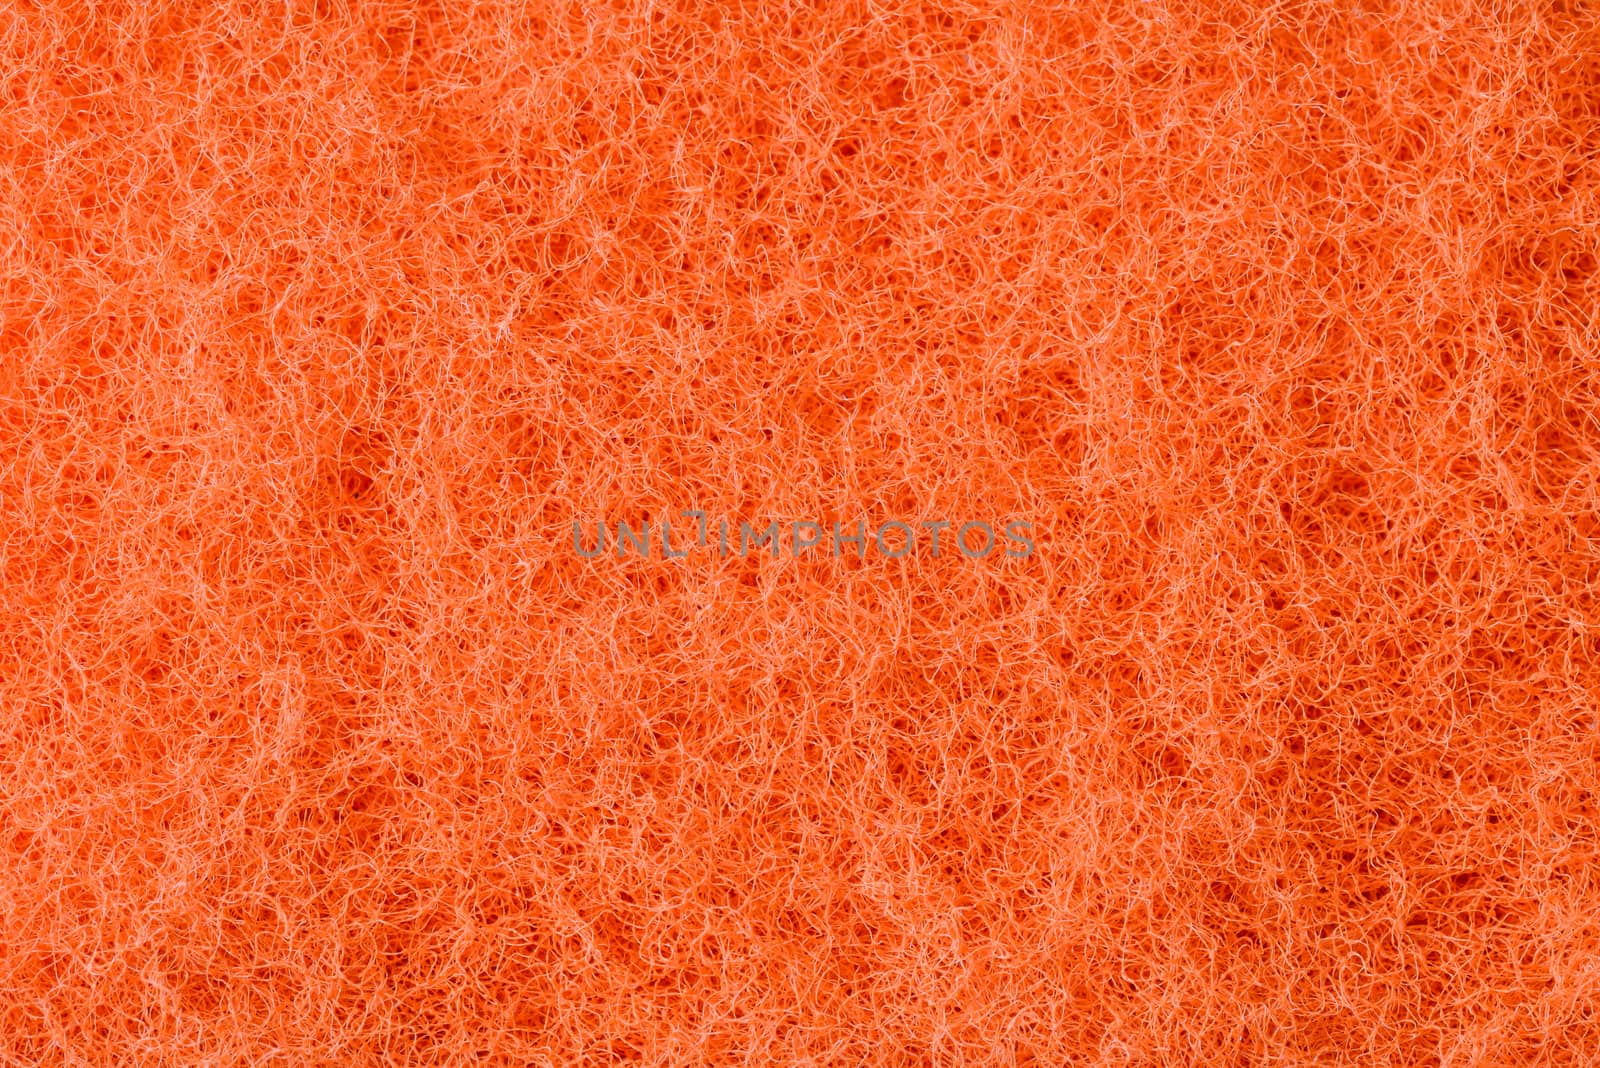 Macro of orange synthetic sponge texture, scrub side